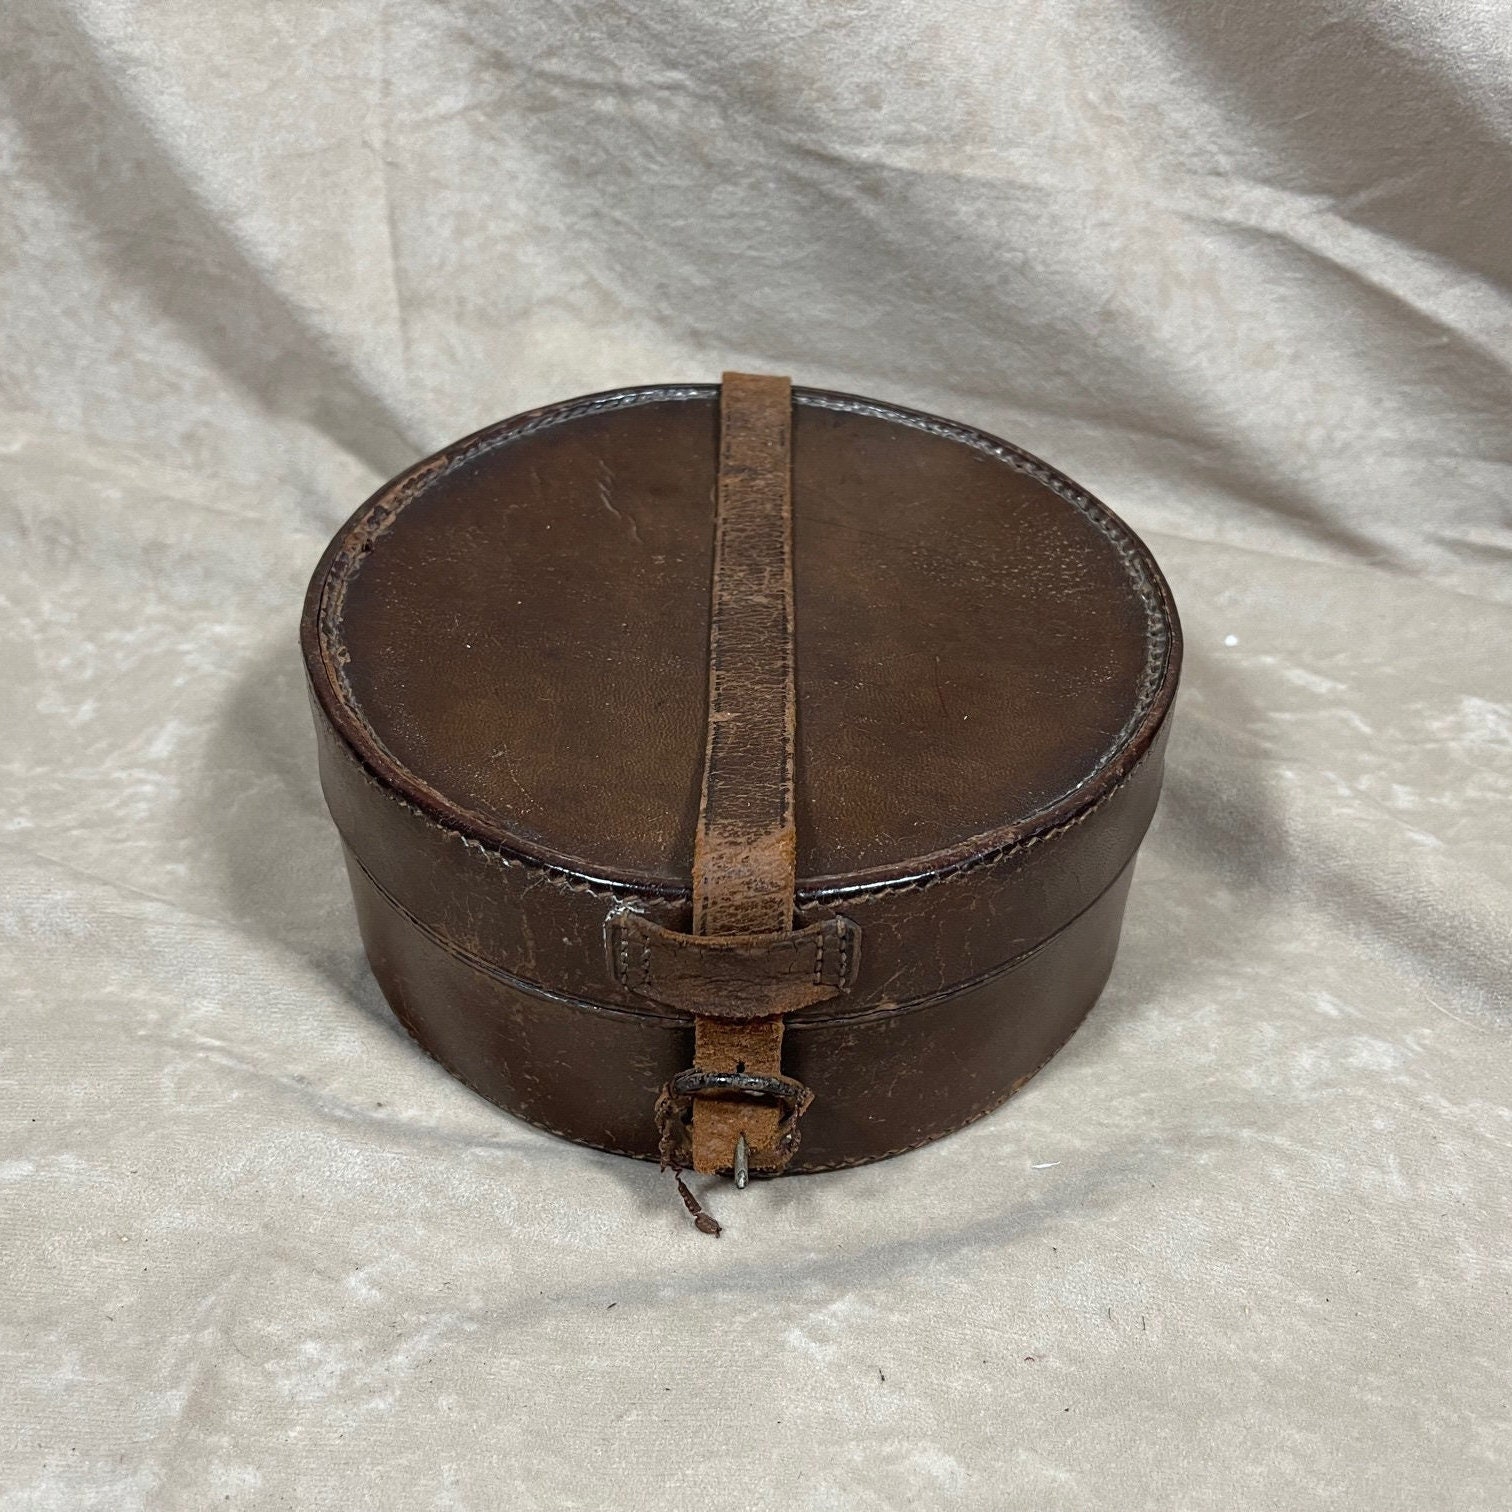 Vintage Black Leather Hat Box, 1920s